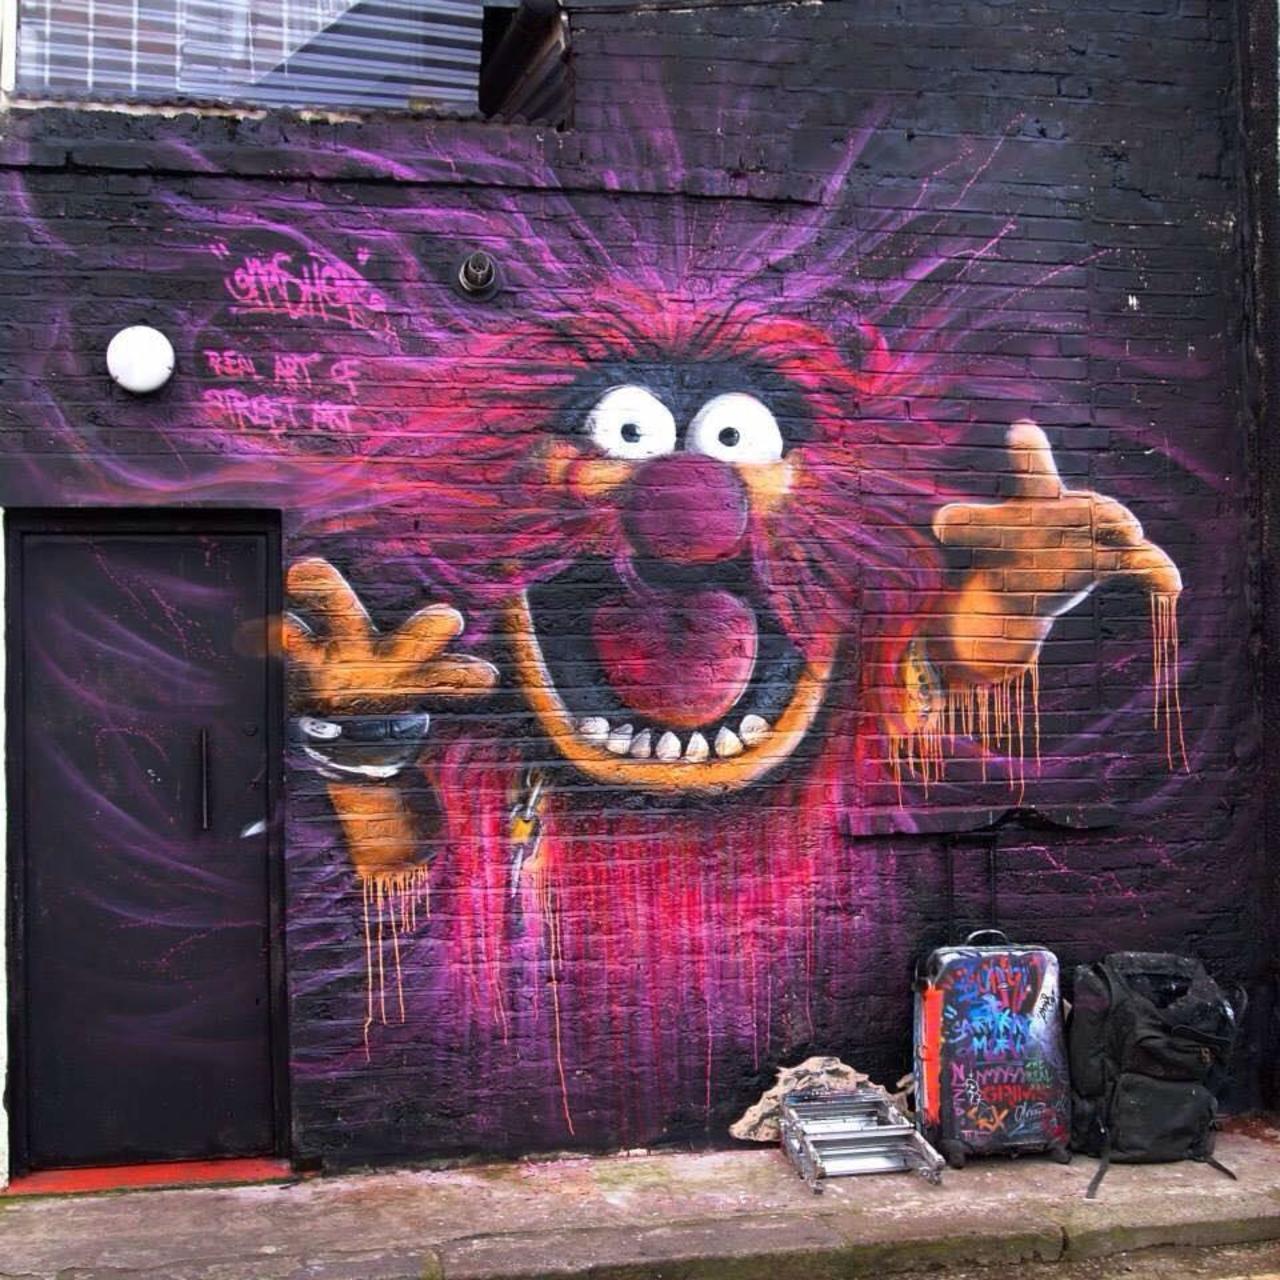 Fun Street Art of Animal by Gnasher 

#art #arte #graffiti #streetart http://t.co/n3cra0napD